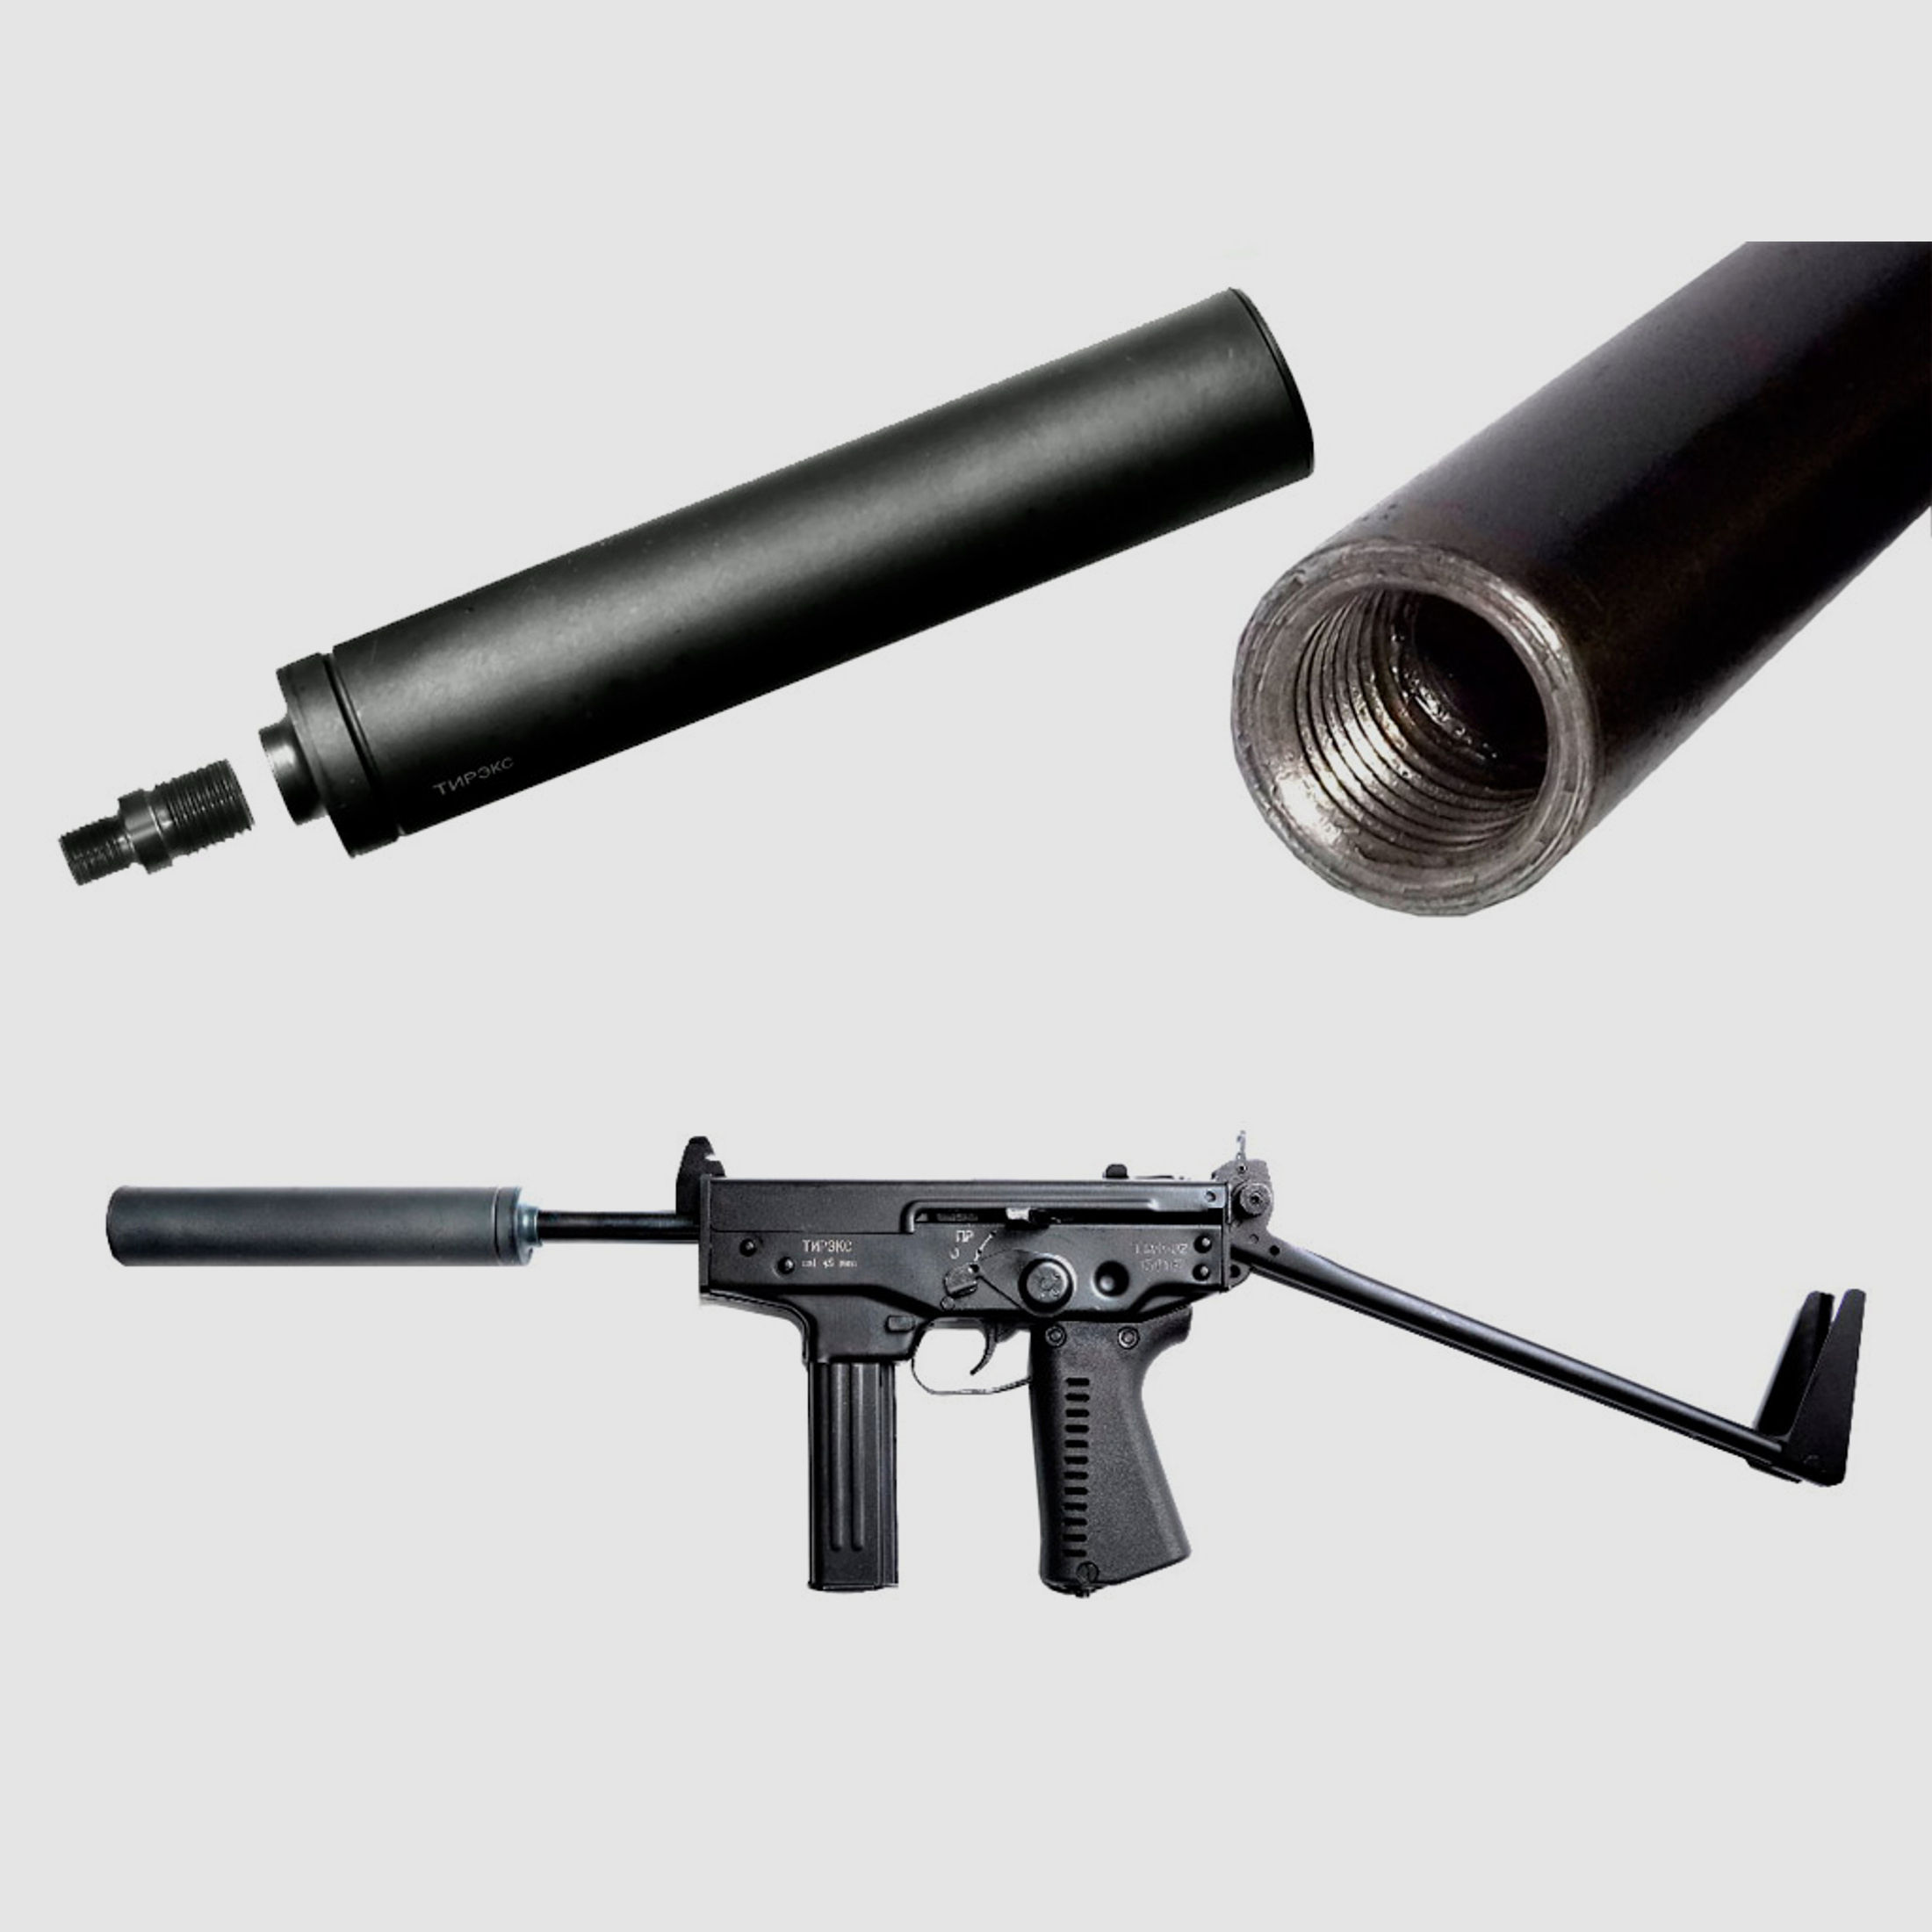 SchalldĂ¤mpferset fĂĽr CO2 Maschinenpistole MP Tyrex / Tirex, inklusive Lauf und Adapter (P18)